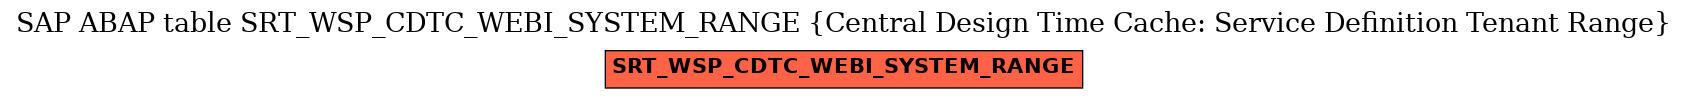 E-R Diagram for table SRT_WSP_CDTC_WEBI_SYSTEM_RANGE (Central Design Time Cache: Service Definition Tenant Range)